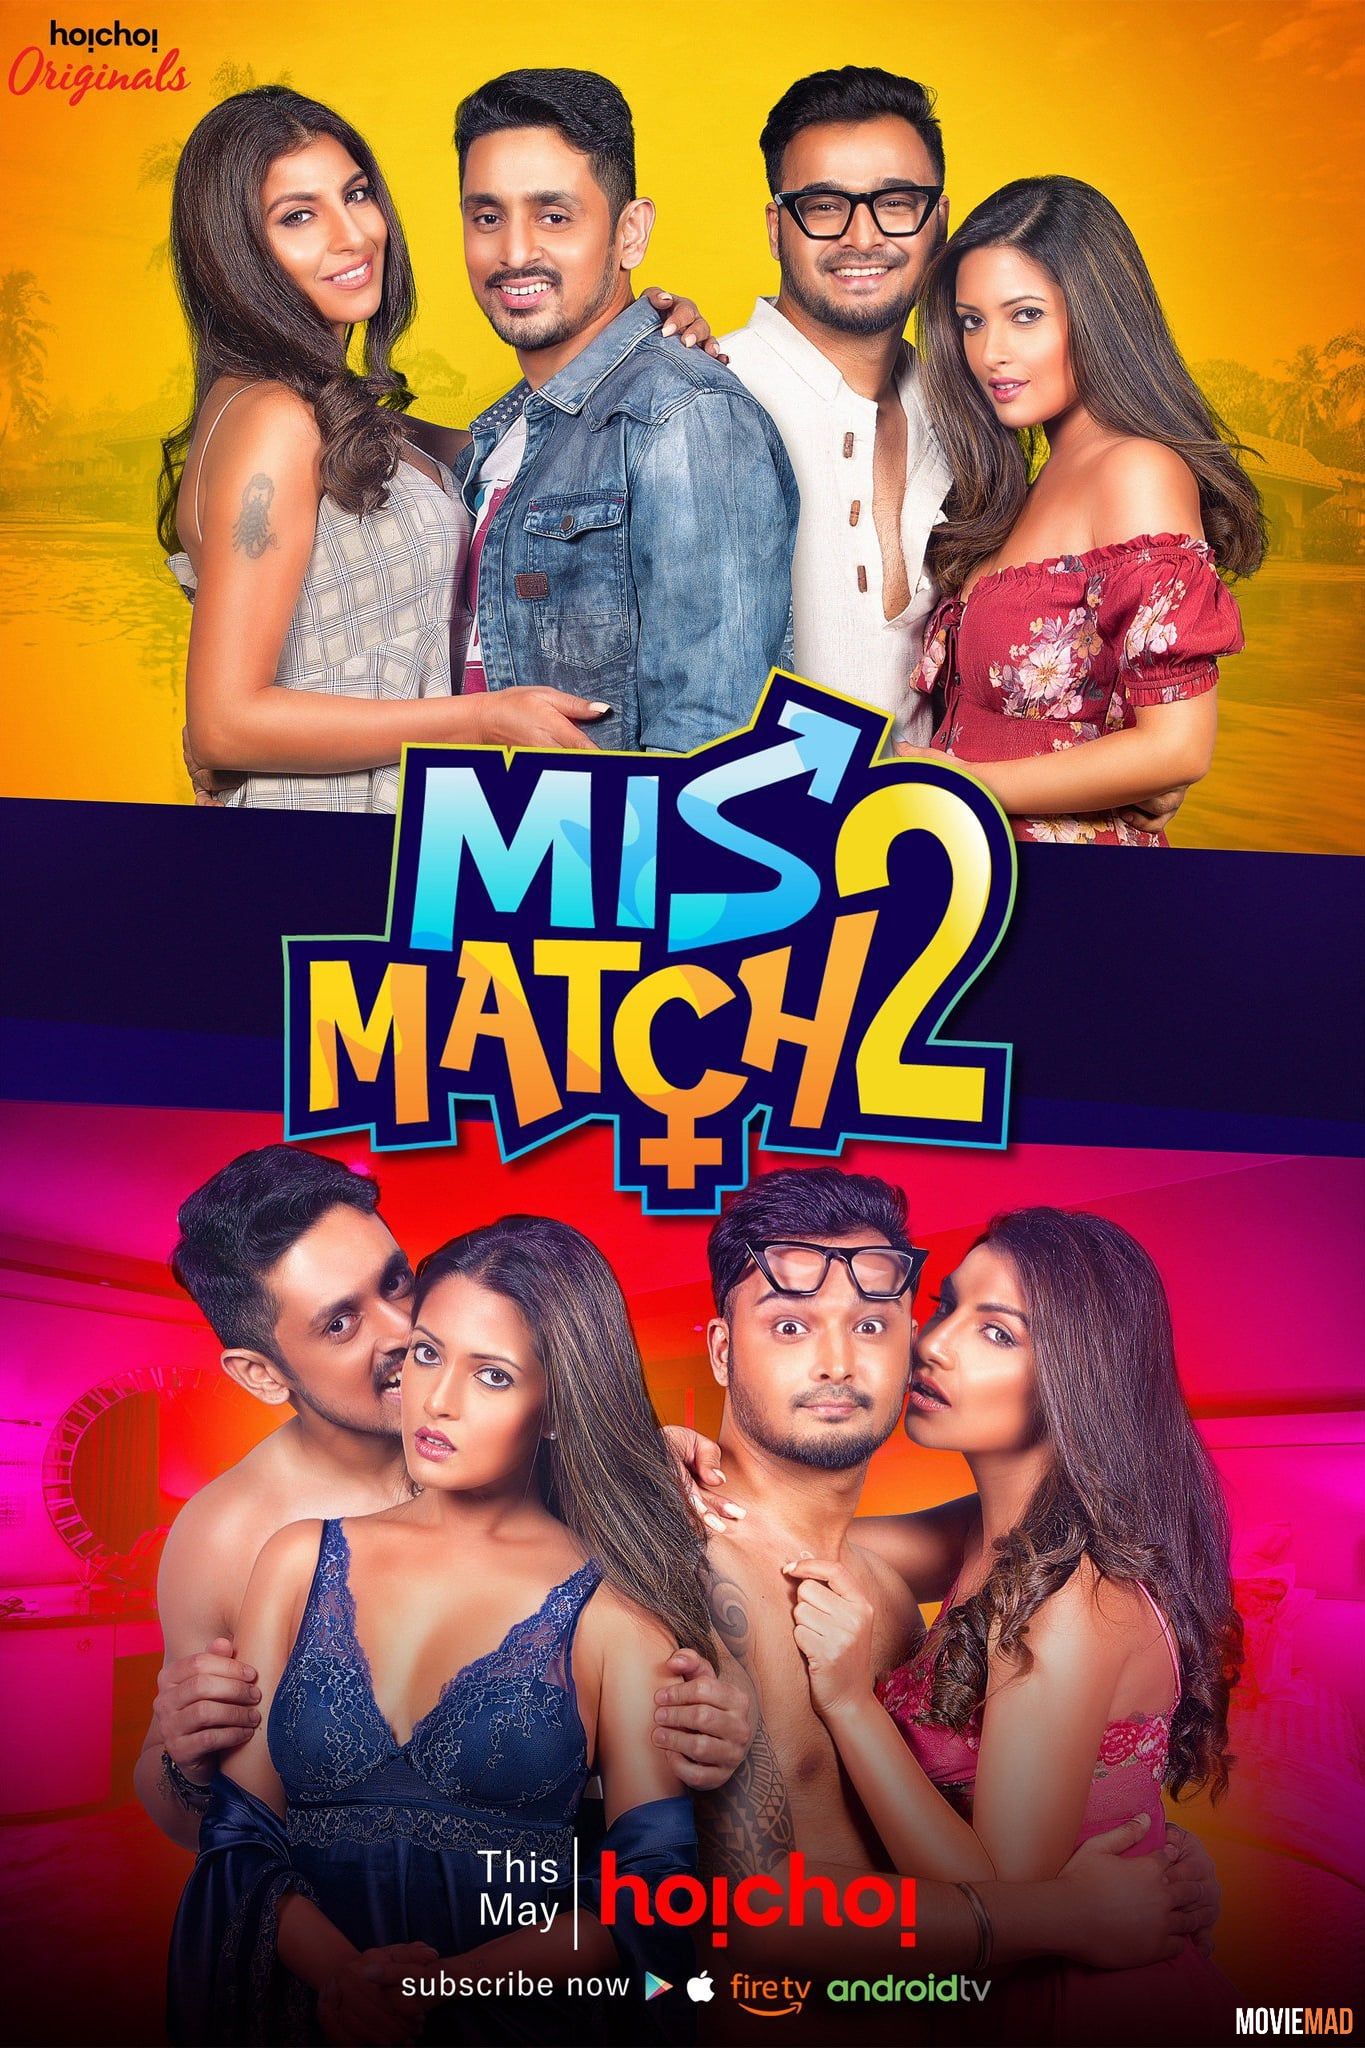 full moviesMismatch S02 2019 Hindi Dubbed Hoichoi Original Complete Web Series HDRip 720p 480p